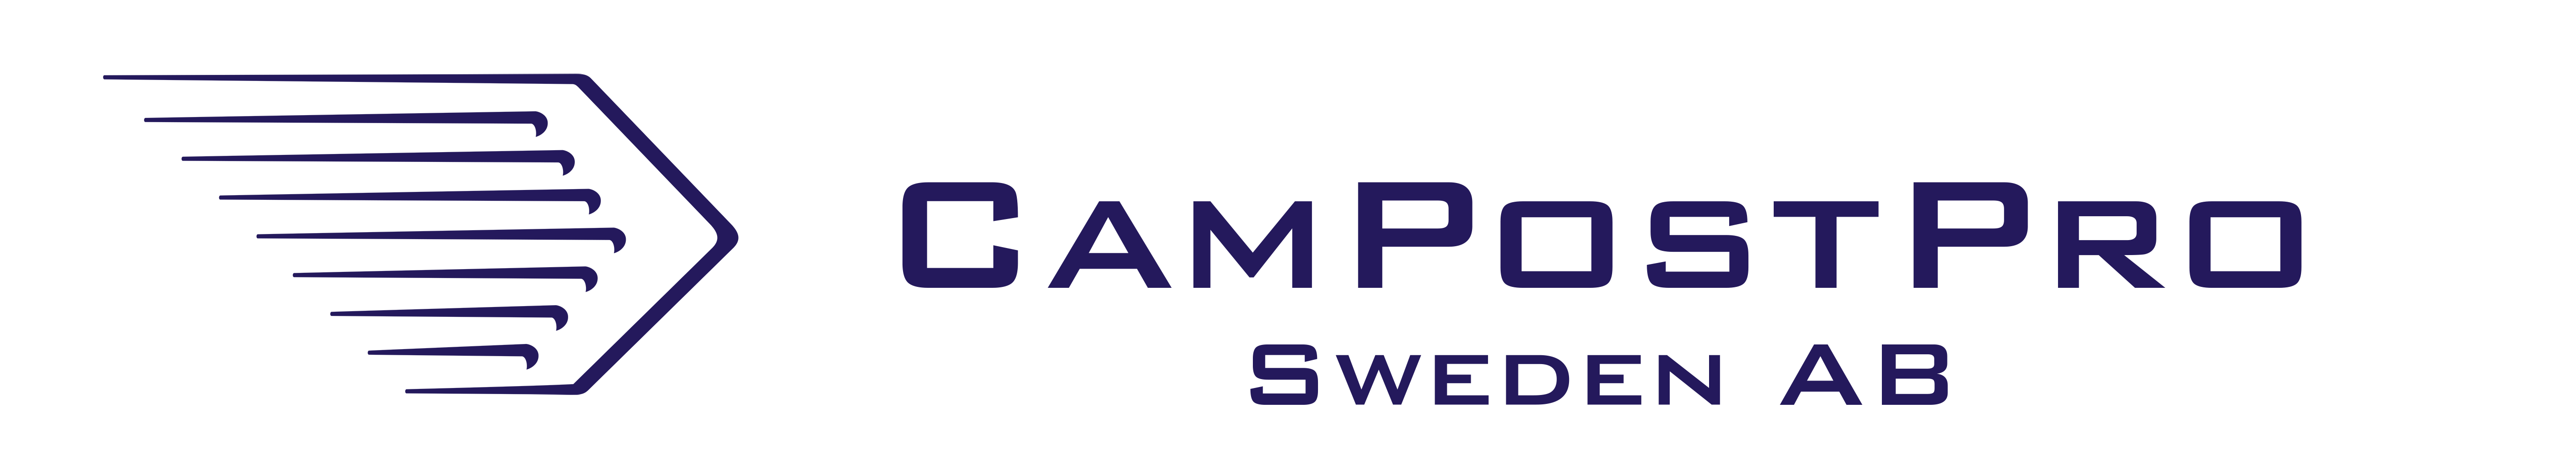 CamPostPro Sweden AB